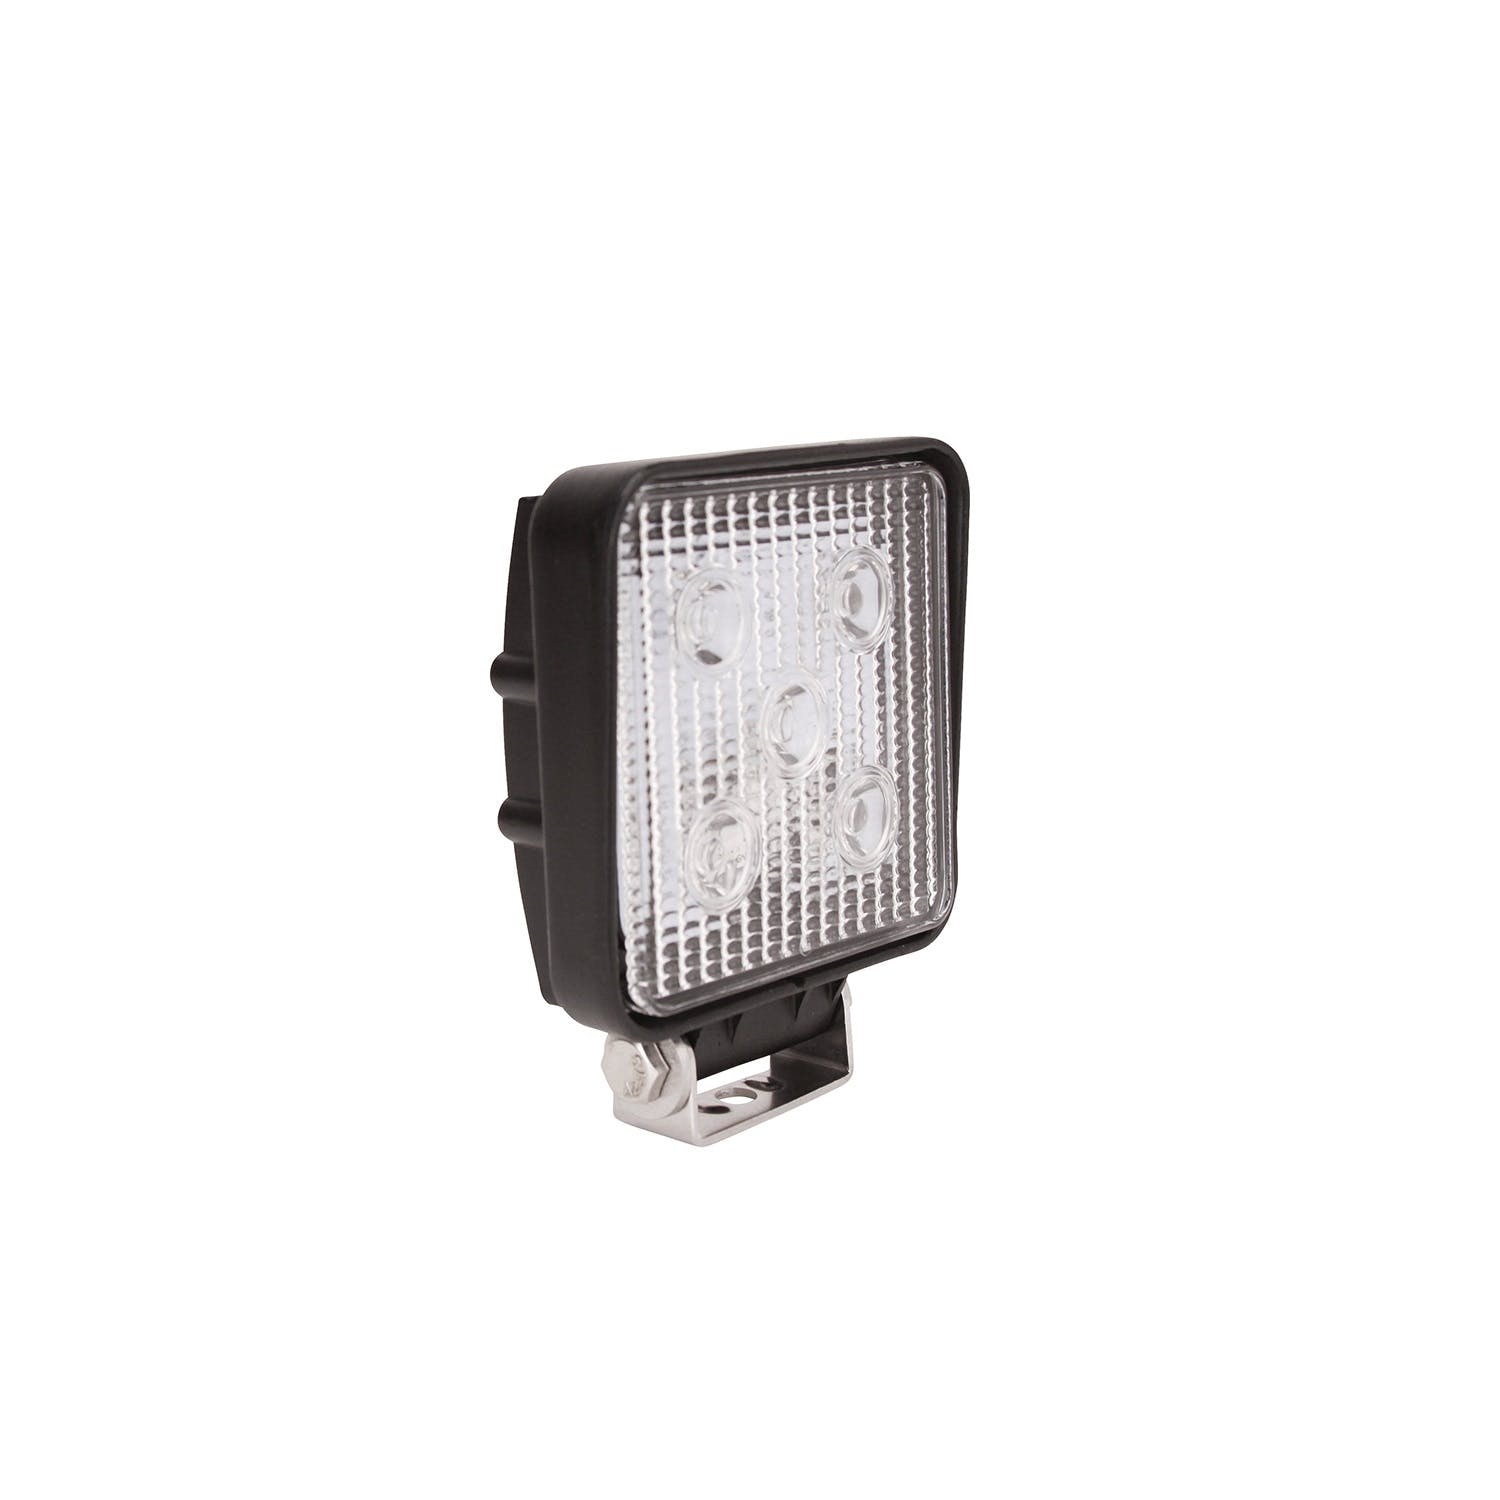 Westin Automotive 09-12210A LED Work Utility Light Square 4.5 inch x 5.4 inch Spot with 3W Epistar